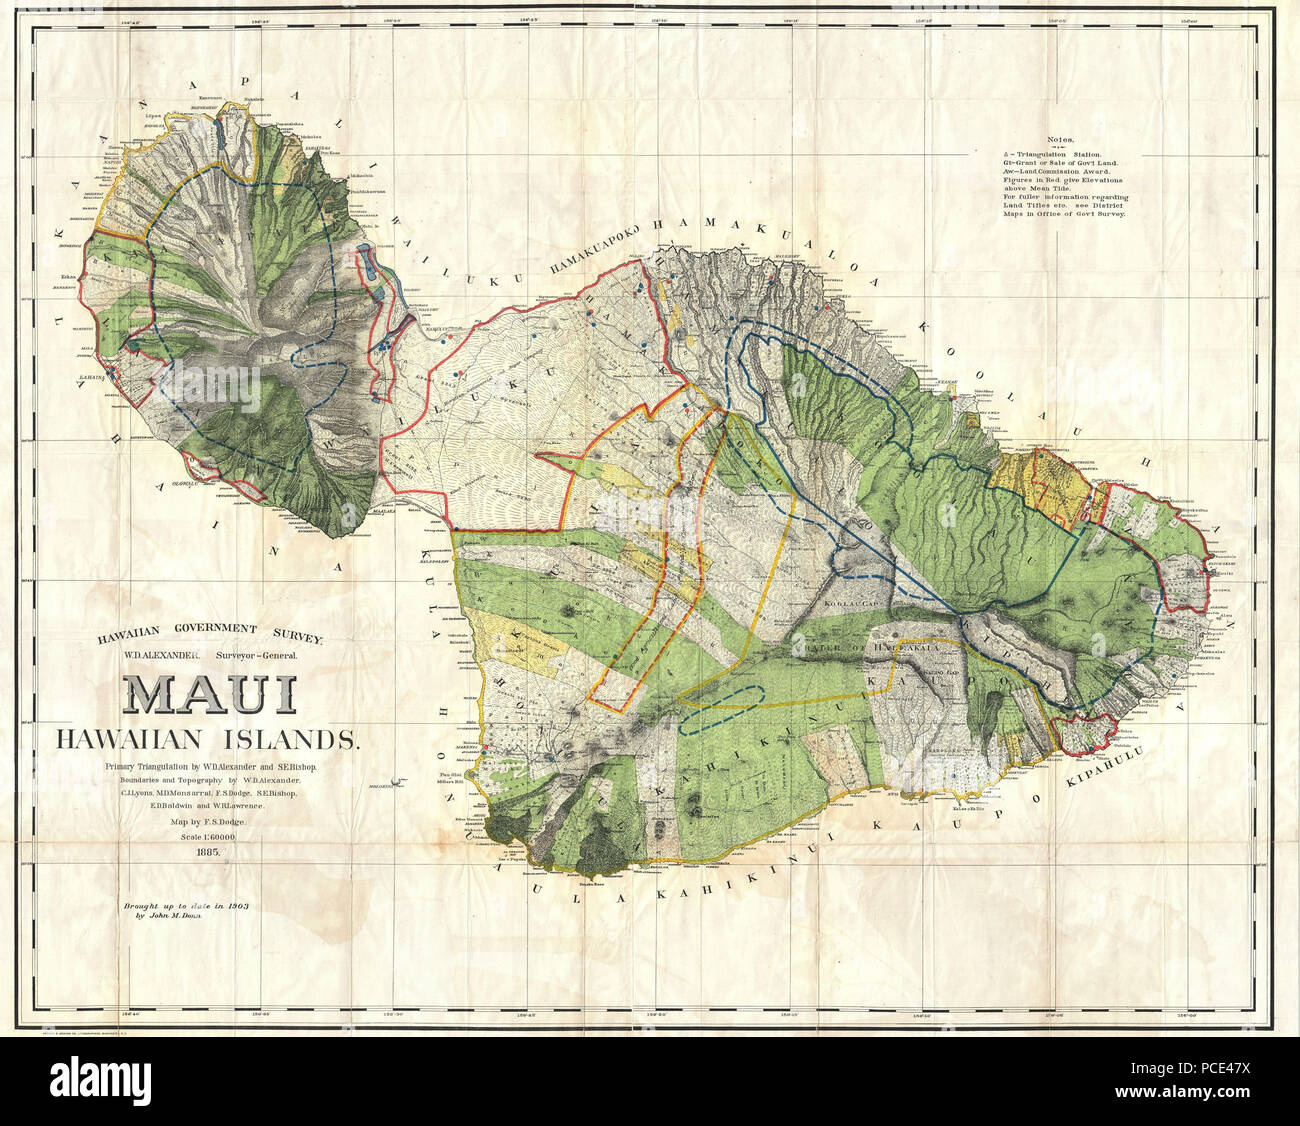 10 1885 De Witt Alexander Karte von Maui, Hawaii - Geographicus - Maui-lo-1885 Stockfoto